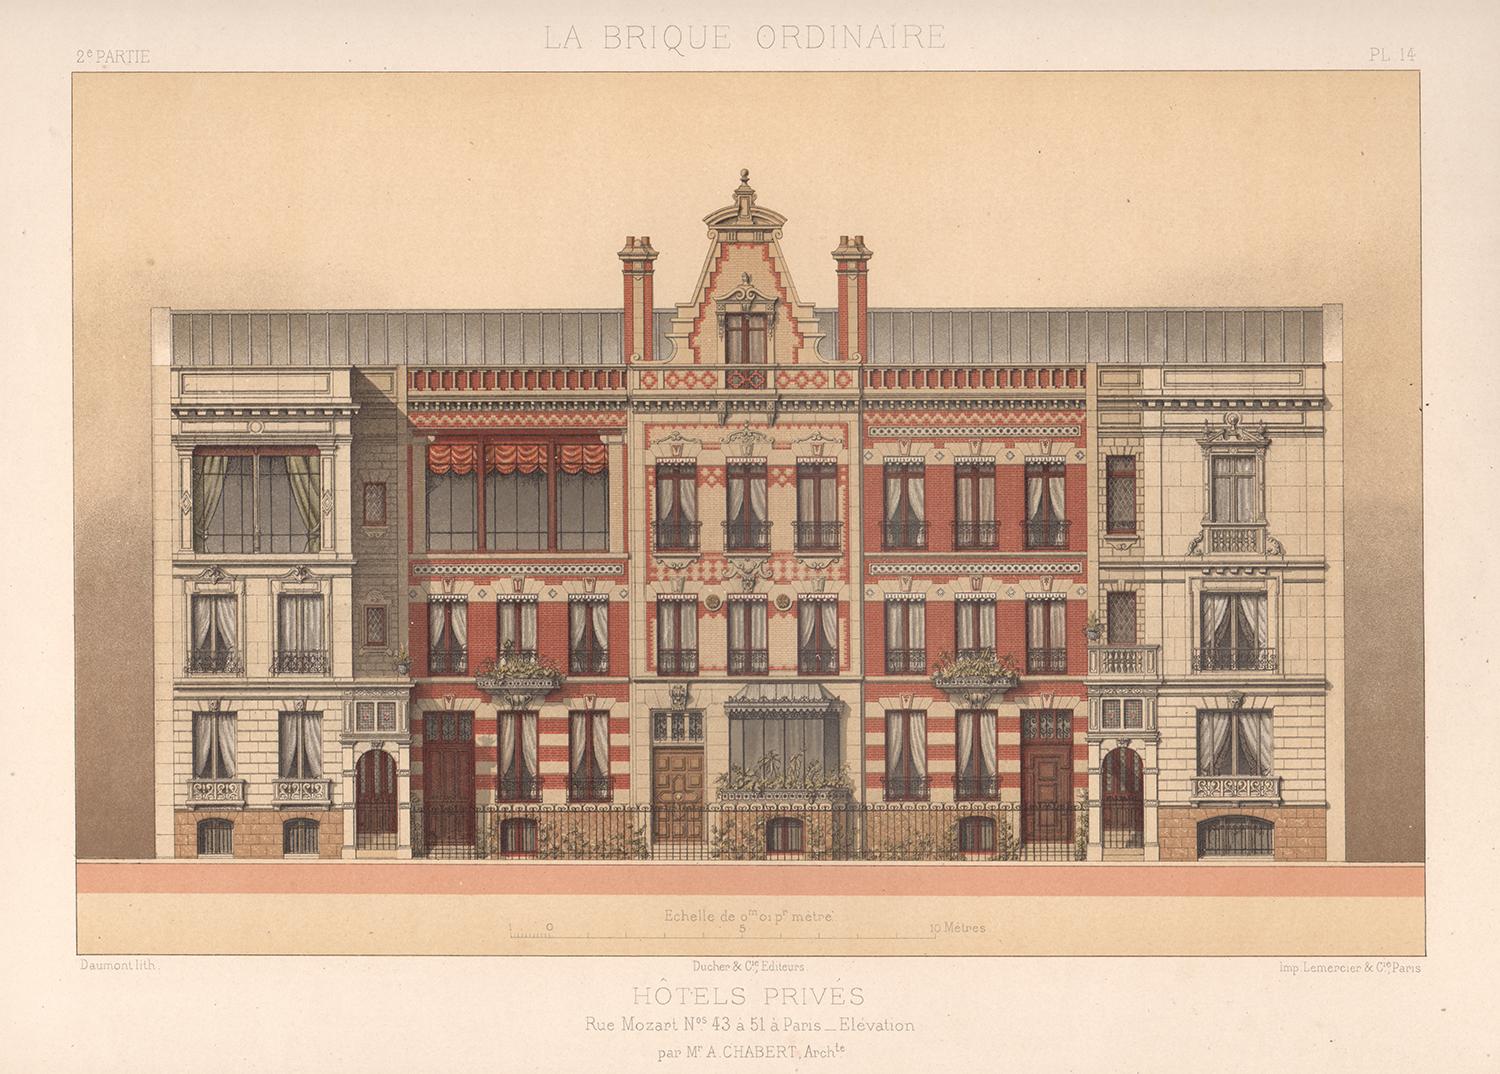 Jean-Francois Daumont Landscape Print - French architecture house design lithograph, late 19th century, 1878